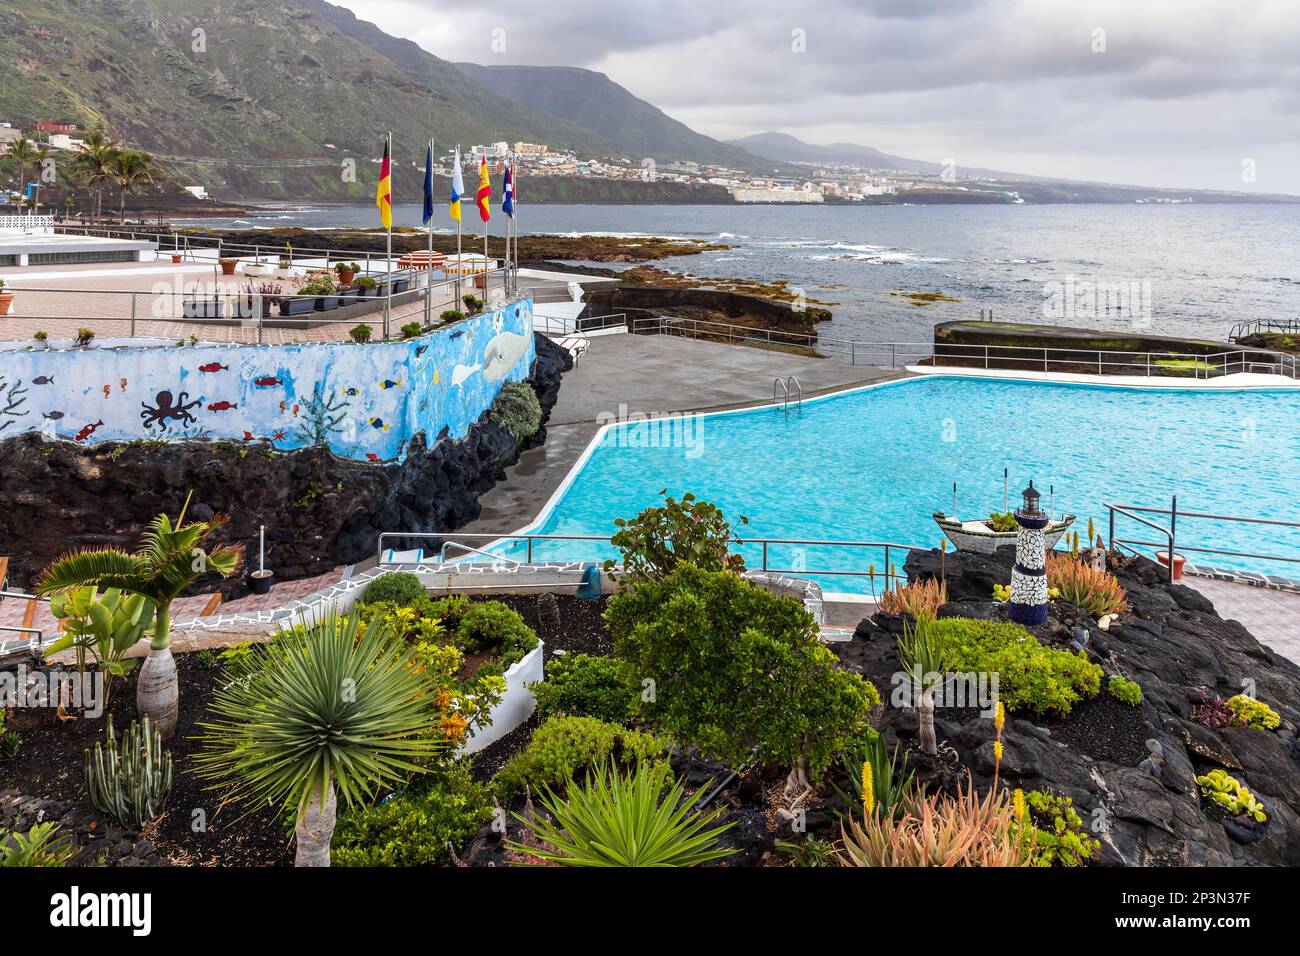 Piscinas Altagay Swimmingpool in Punta del Hidalgo auf Teneriffa, Kanarische Inseln. Stockfoto